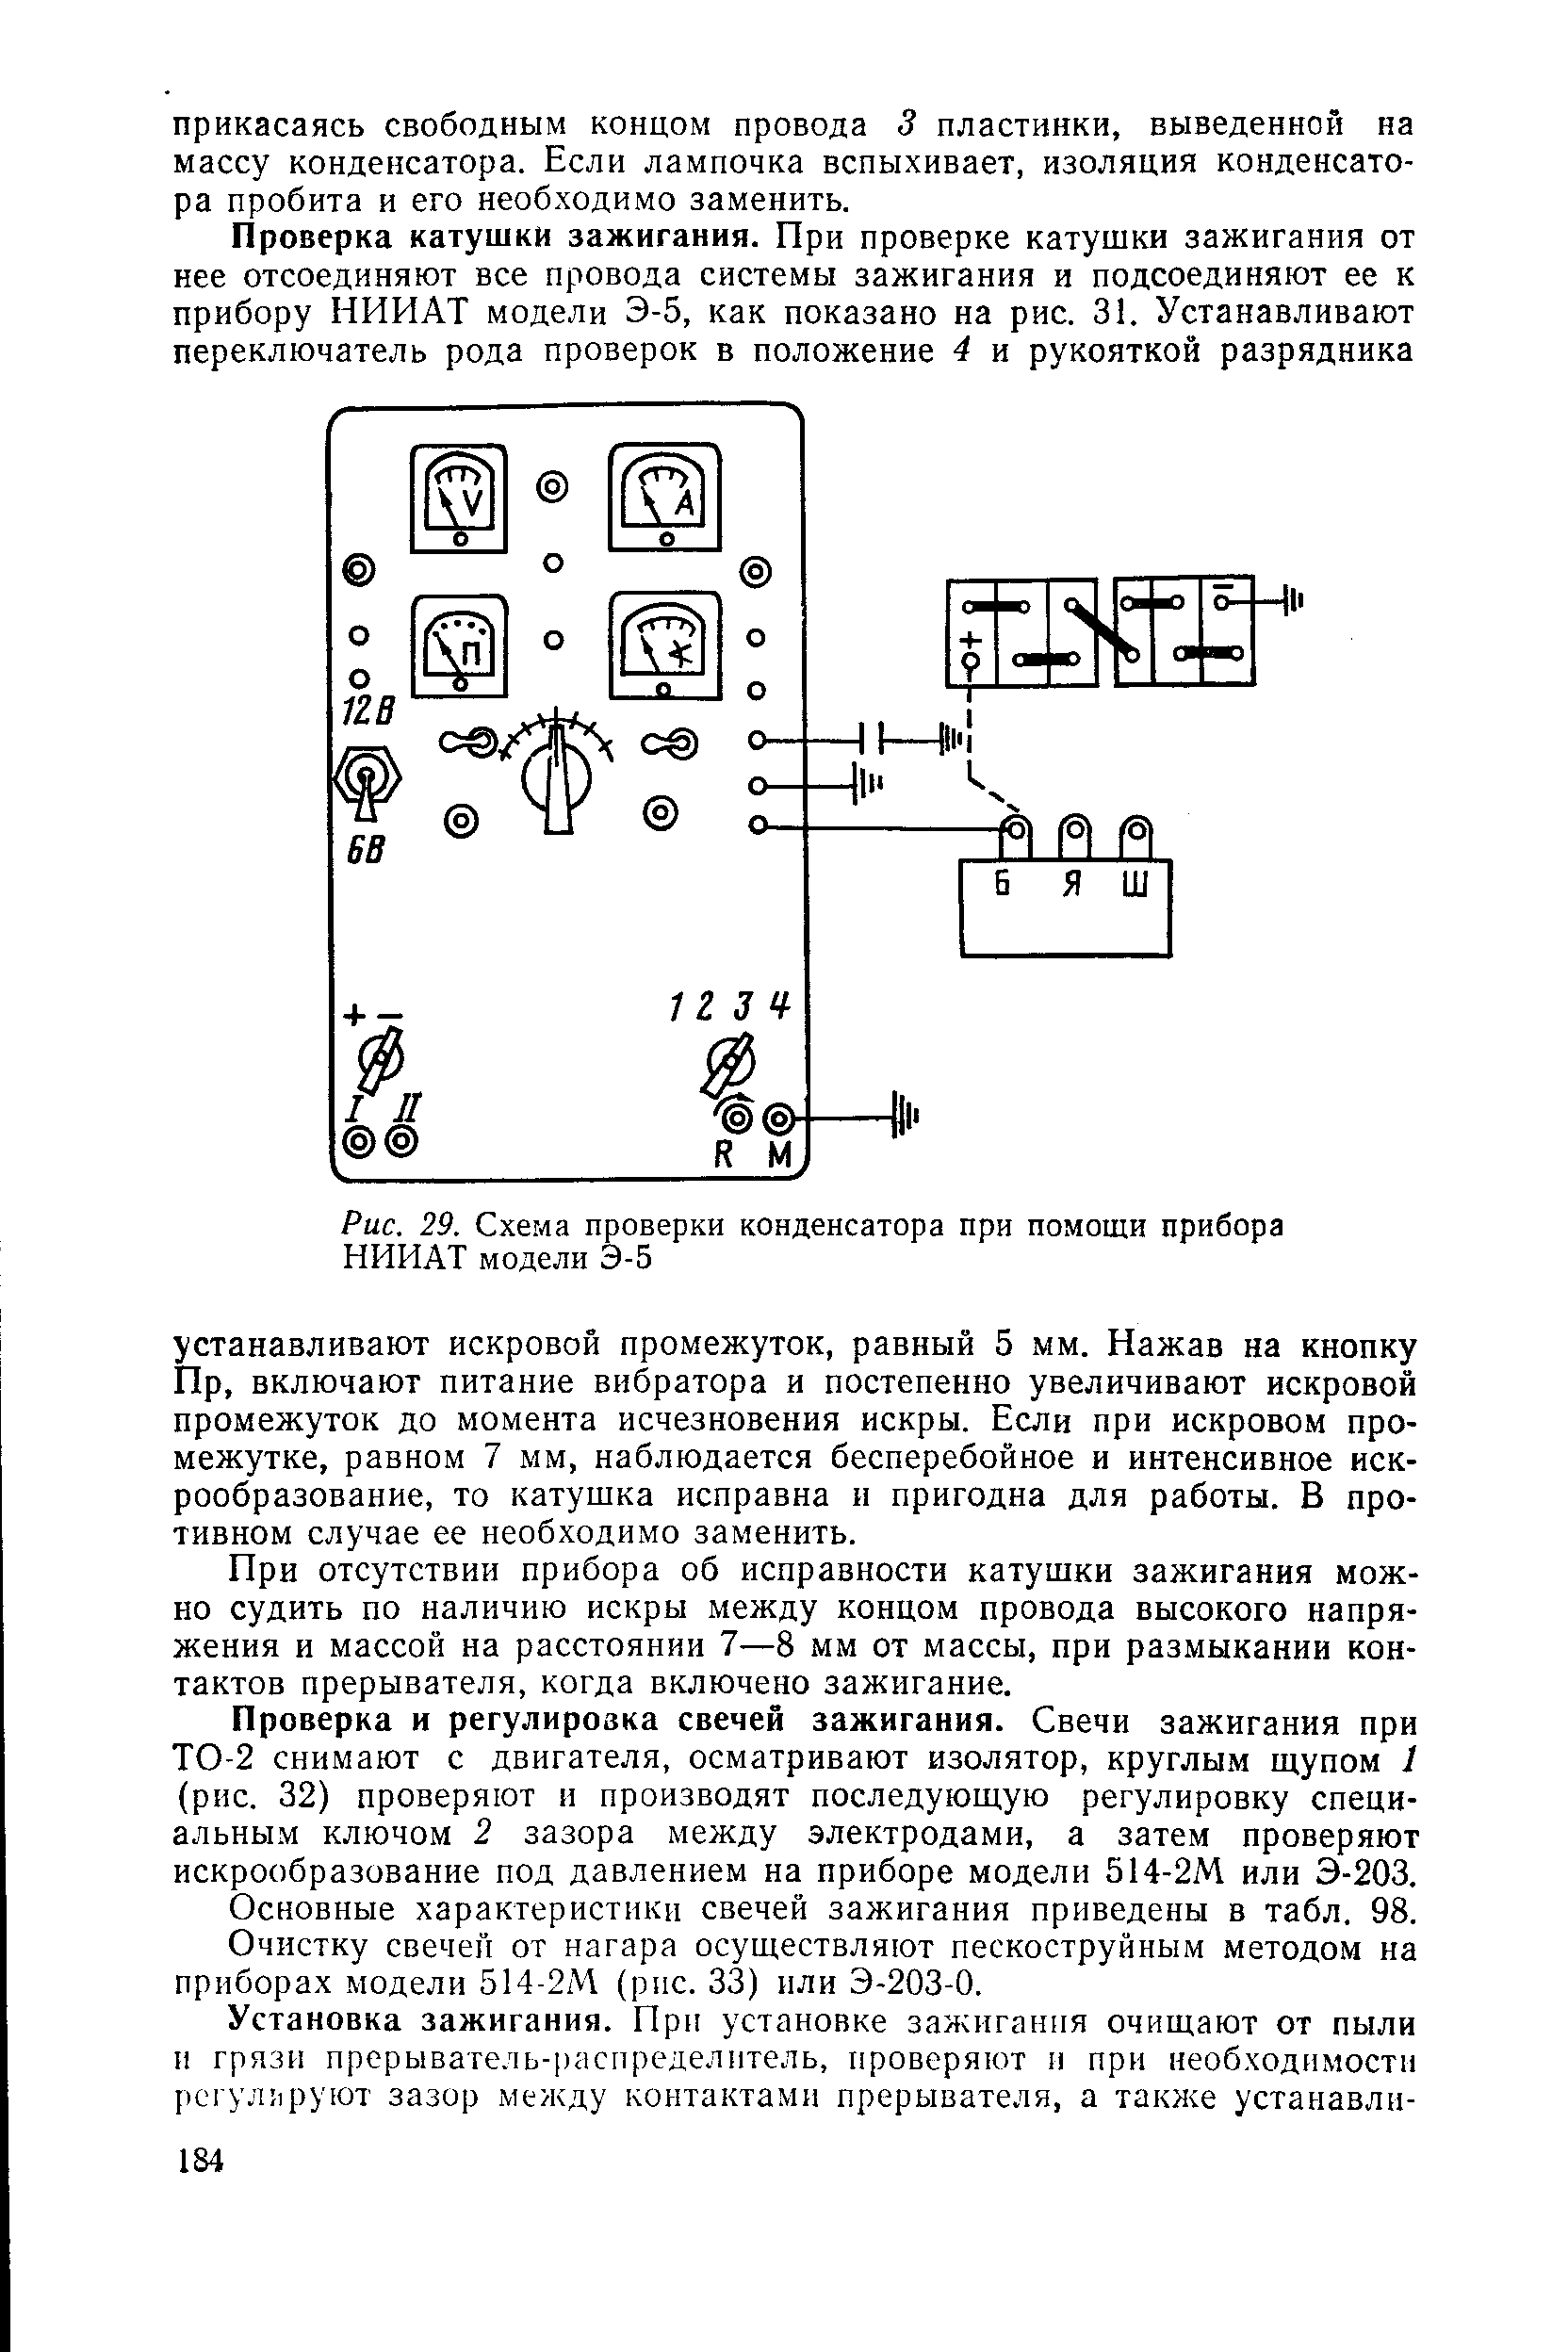 Рис. 29. Схема проверки конденсатора при помощи прибора НИИАТ модели Э-5
